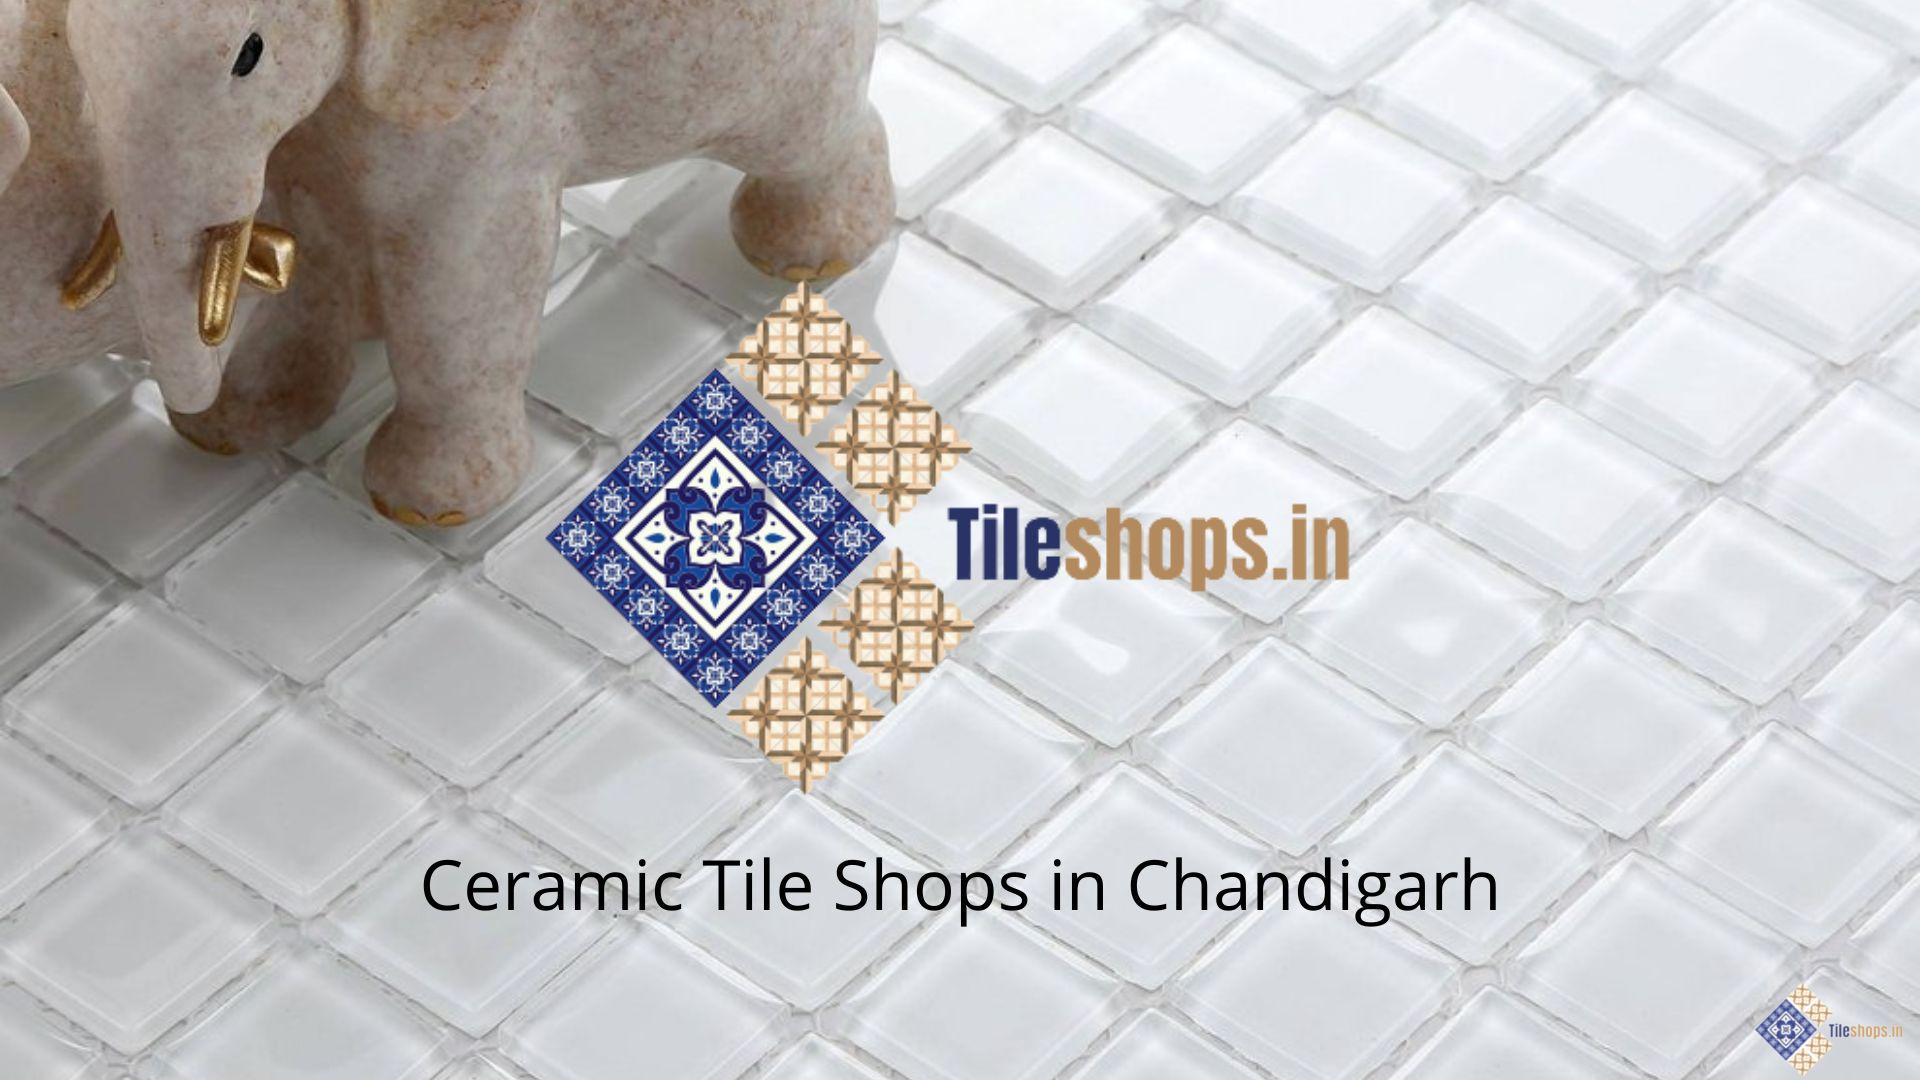 Ceramic Tile Shops in Chandigarh